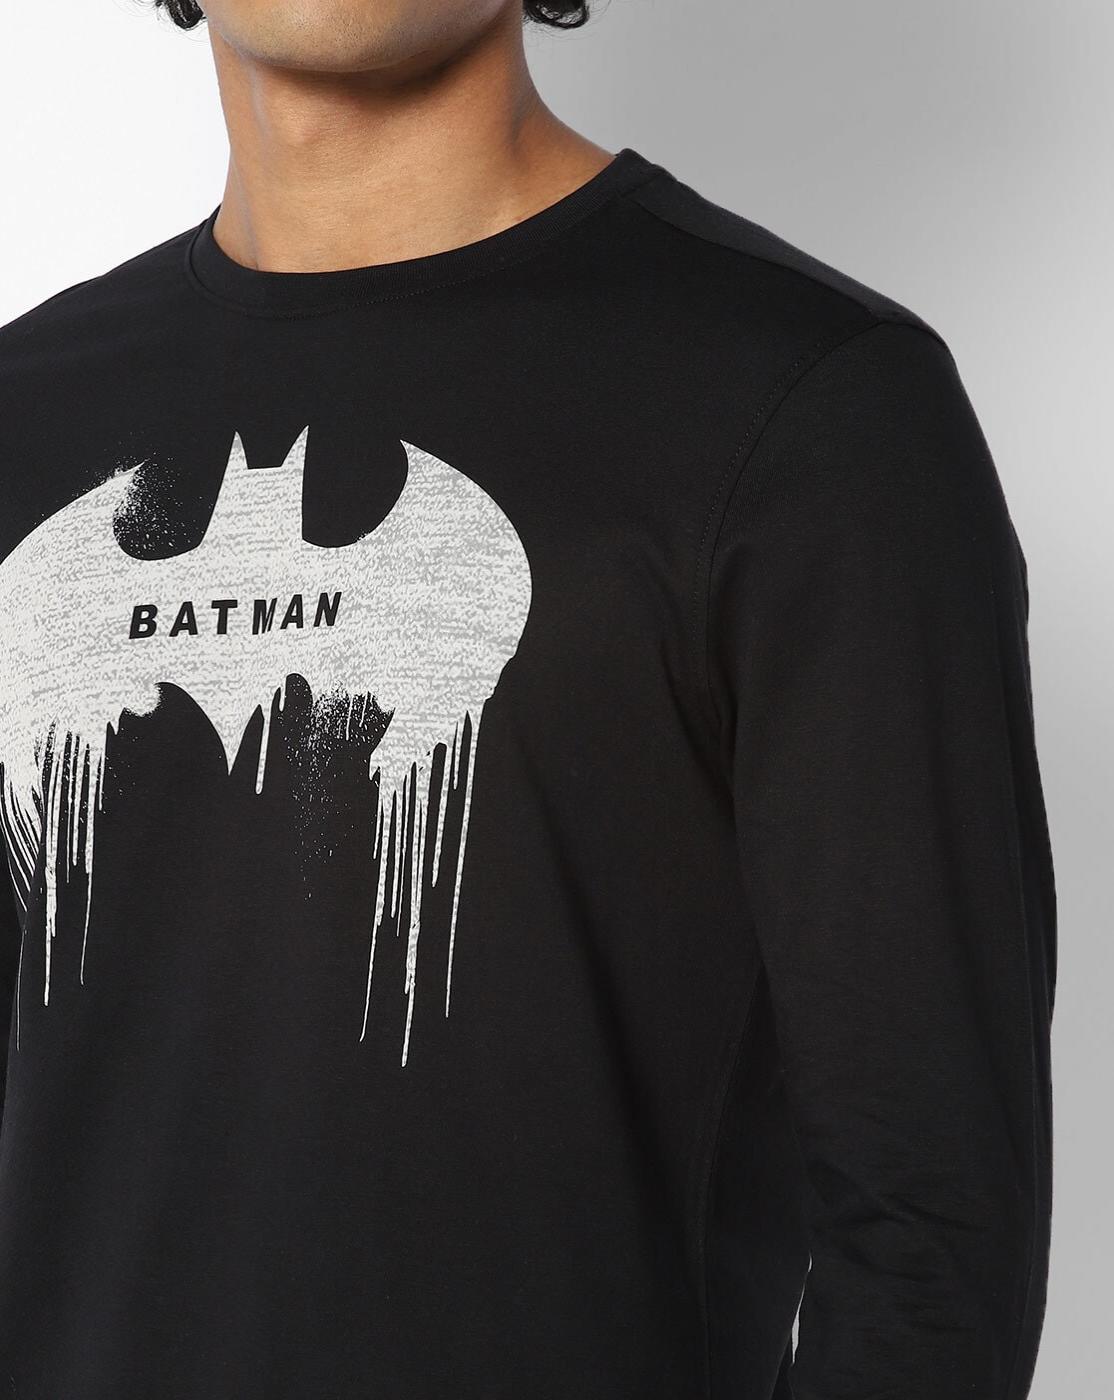 jet's batman shirt